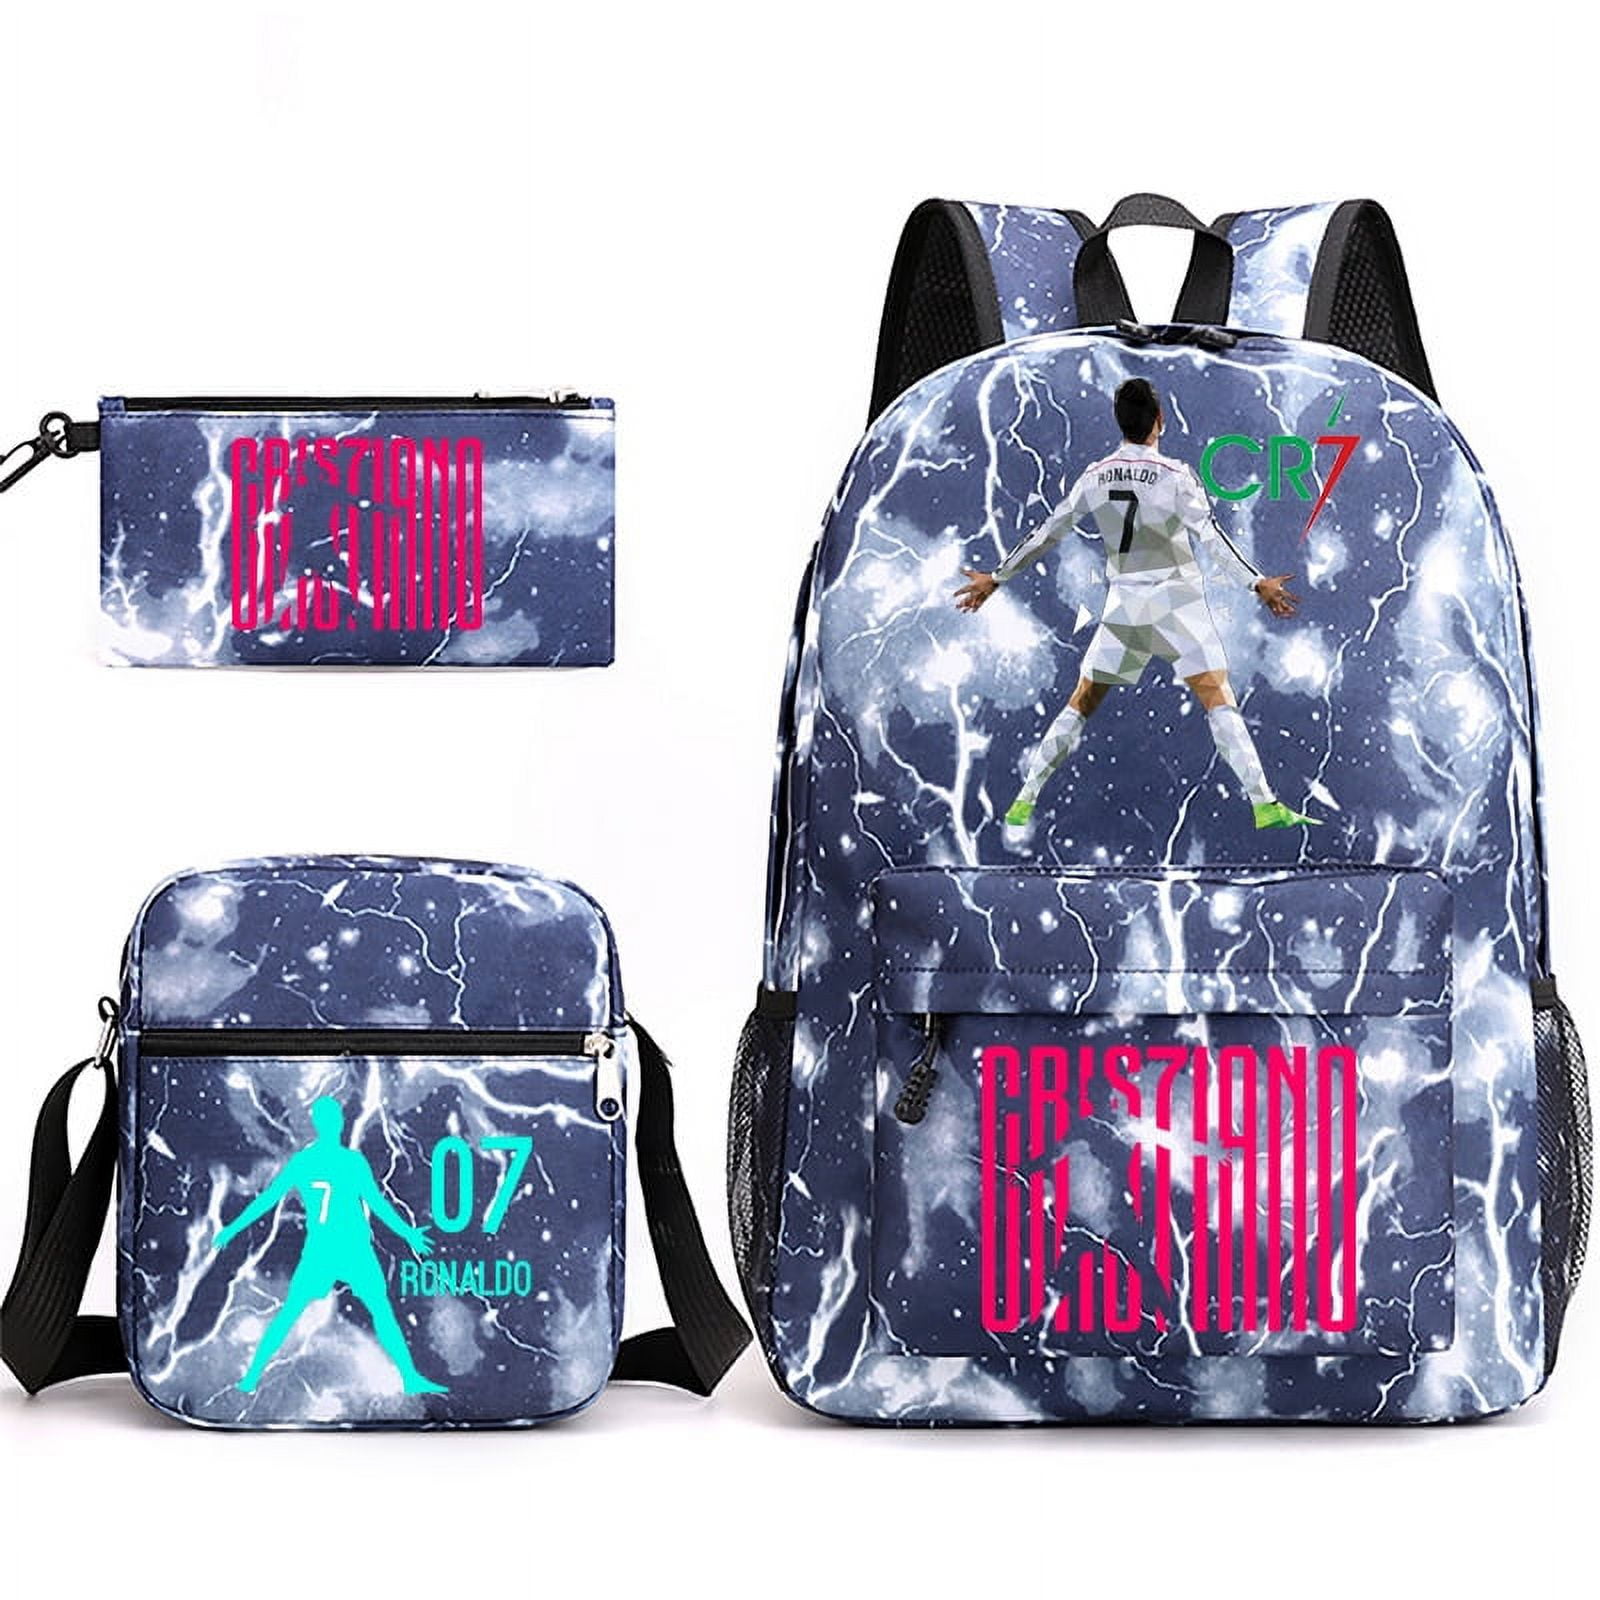 Bags & Backpacks | Cr7 Orange Backpack | Freeup